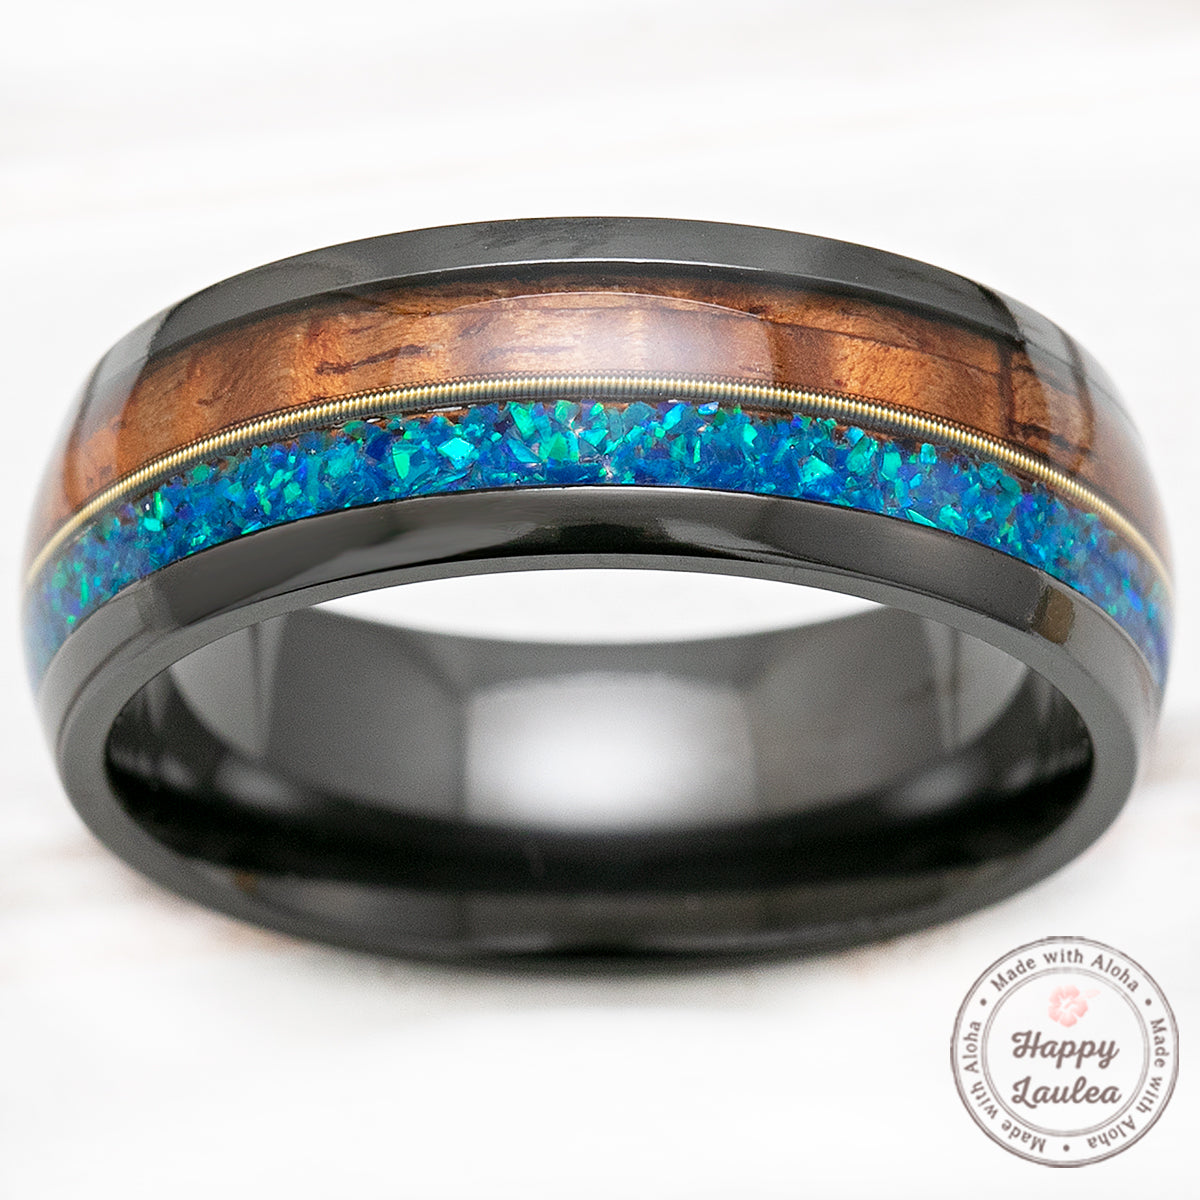 Black Zirconium 8mm Ring with Guitar String, Azure Opal, & Hawaiian Koa Wood - Dome Shape, Comfort Fitment